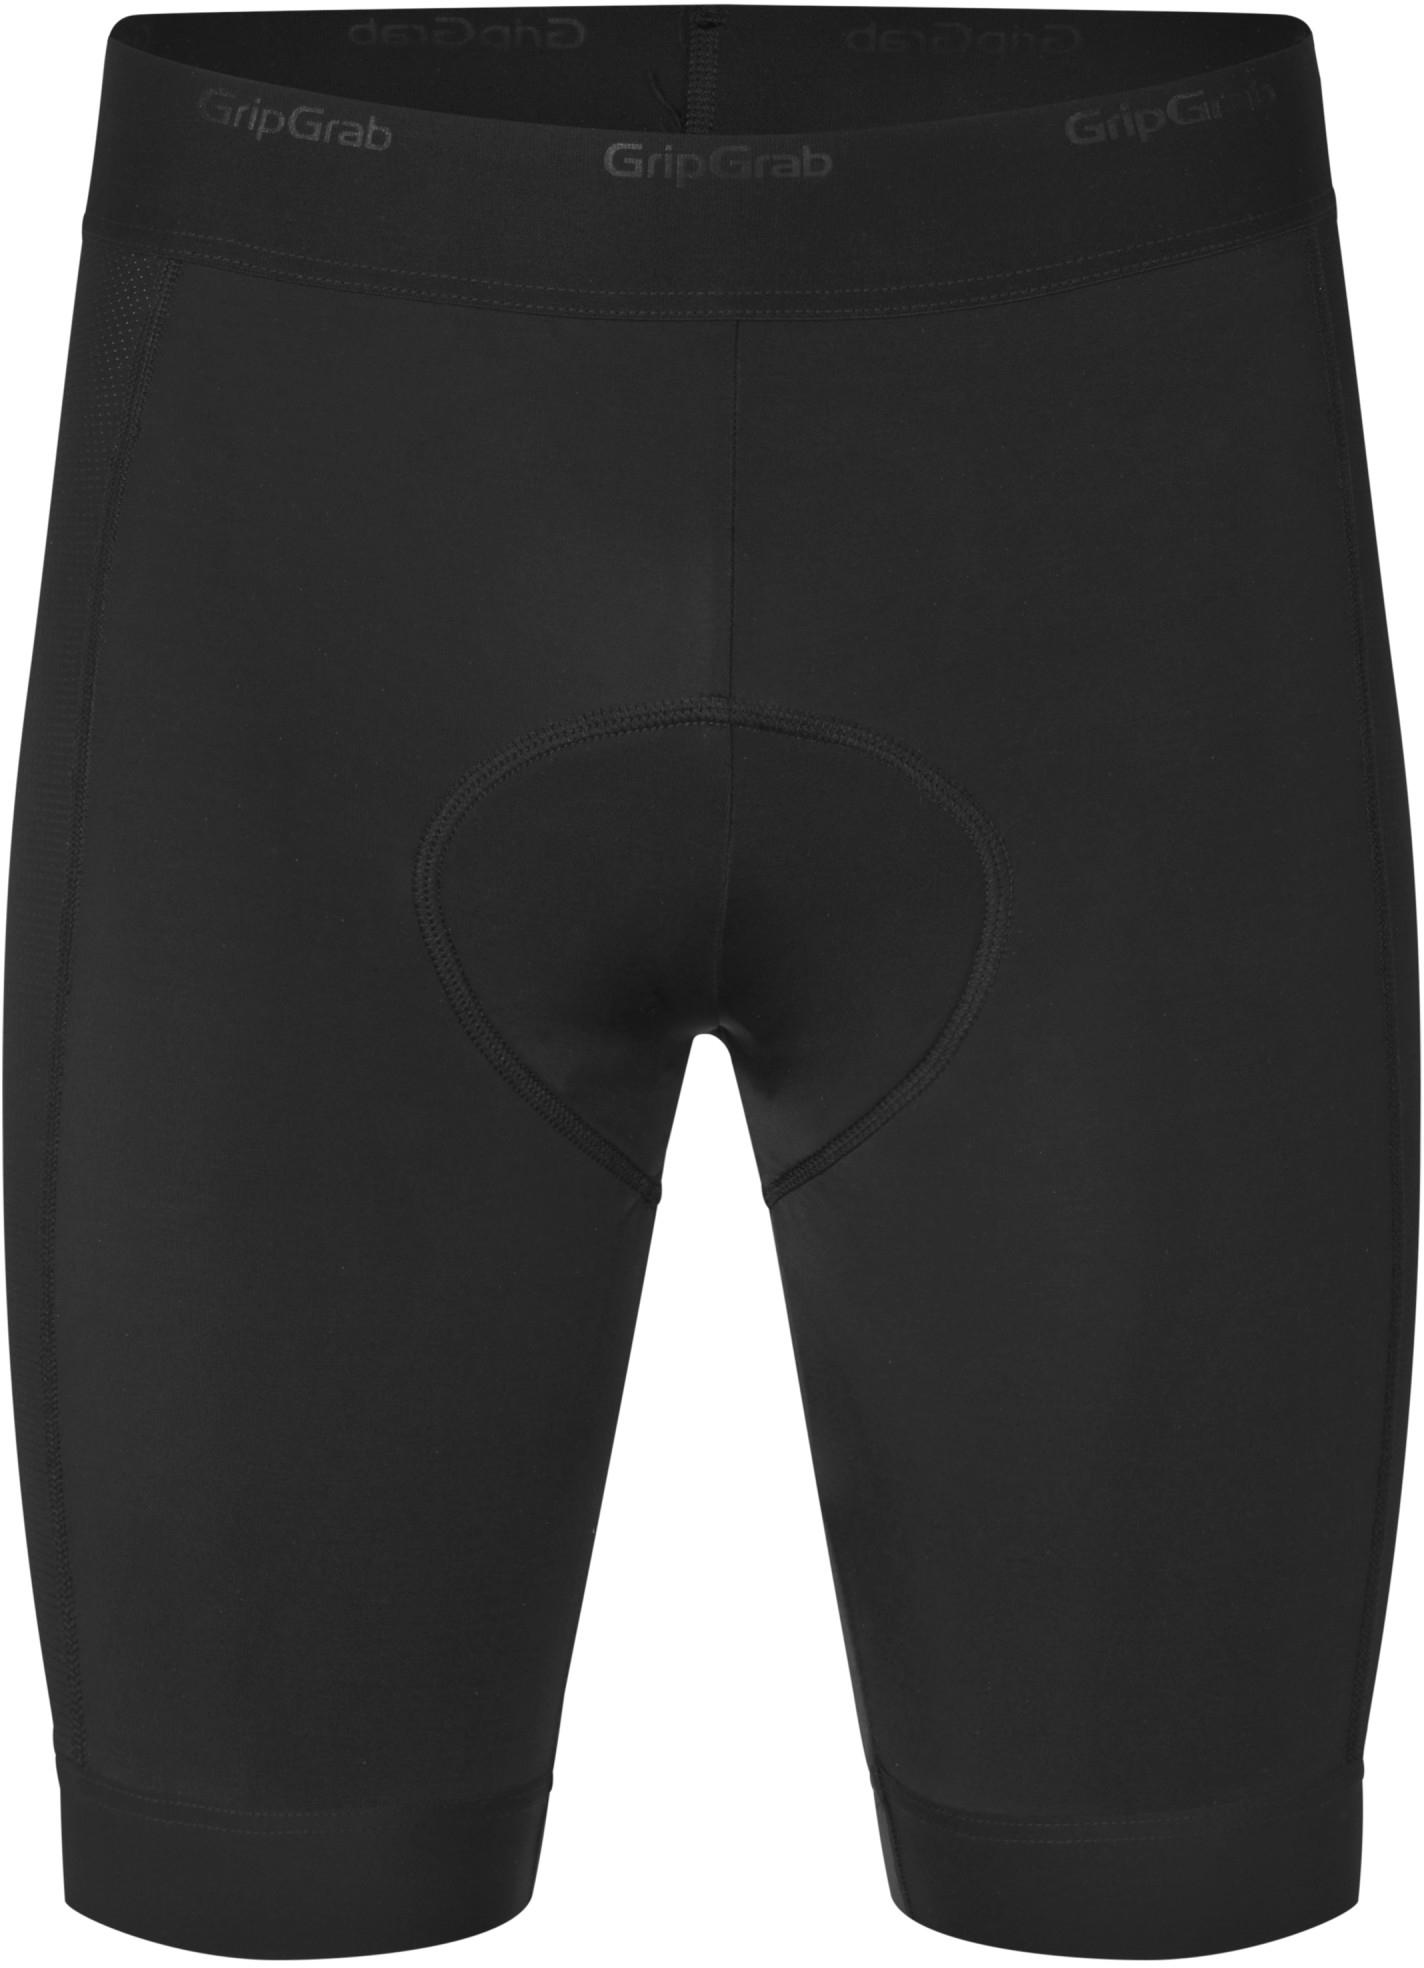 Gripgrab Ventilite Padded Liner Shorts - Black